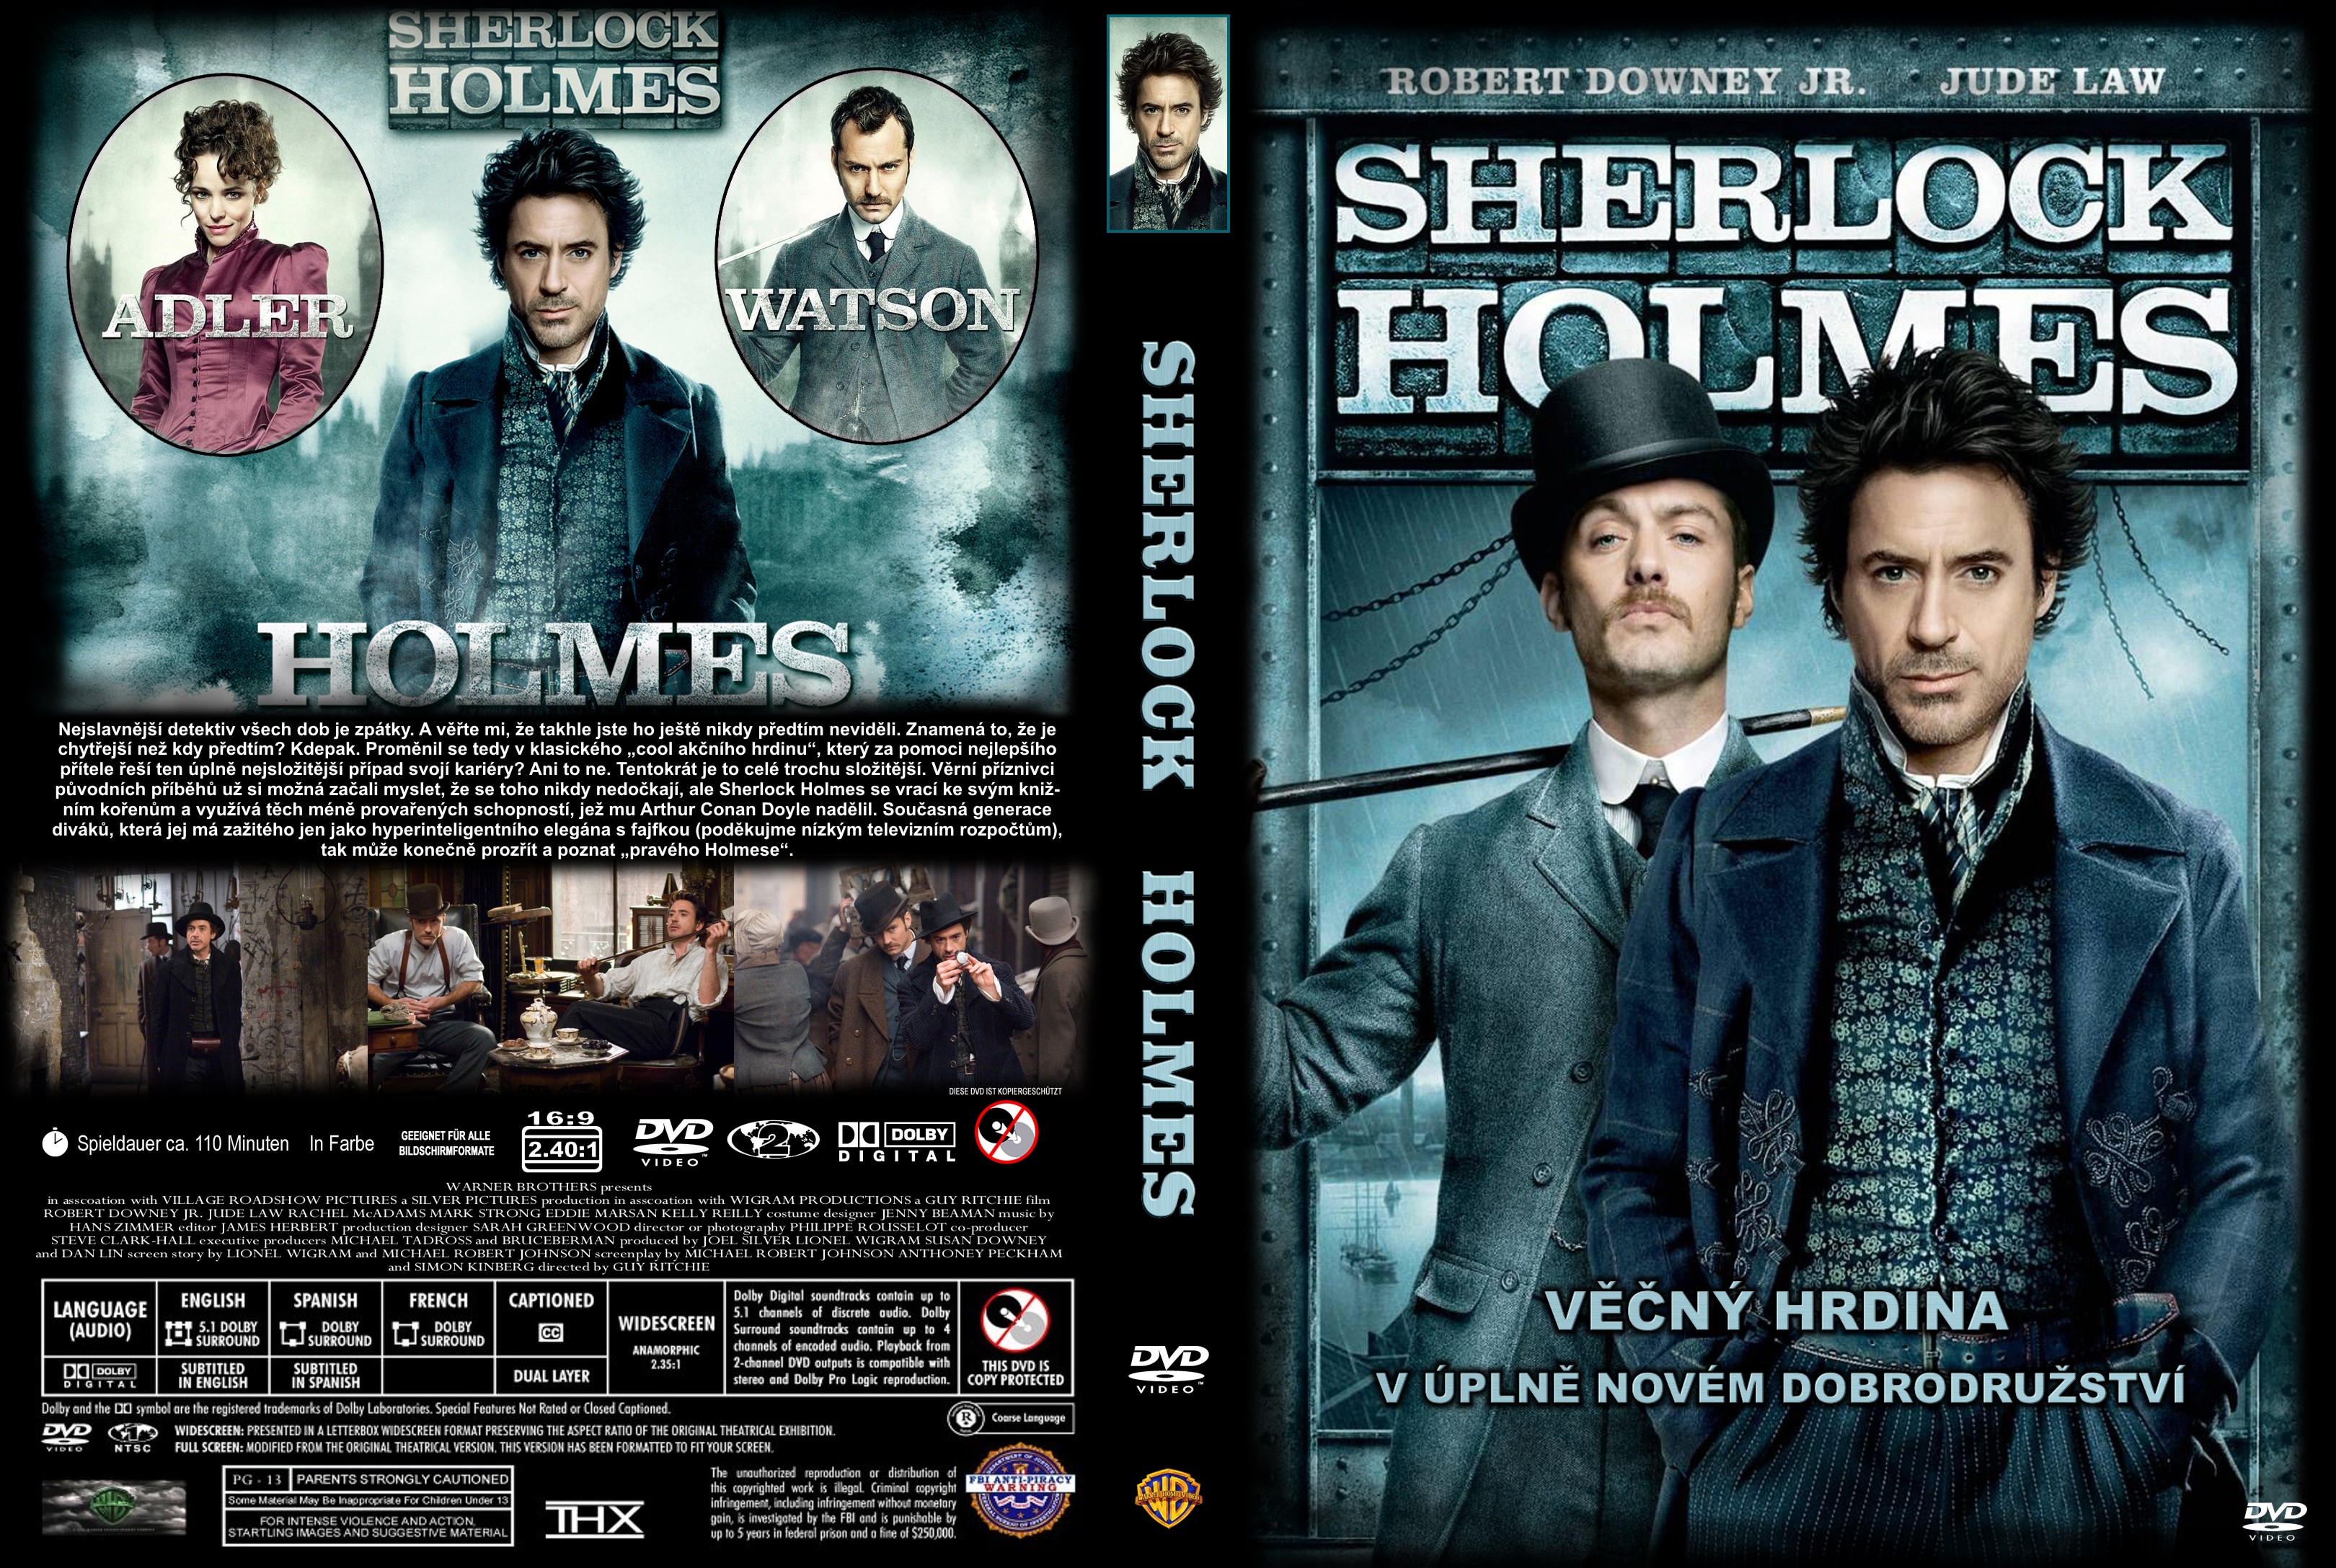 Sherlock holmes 2009 DVD Cover